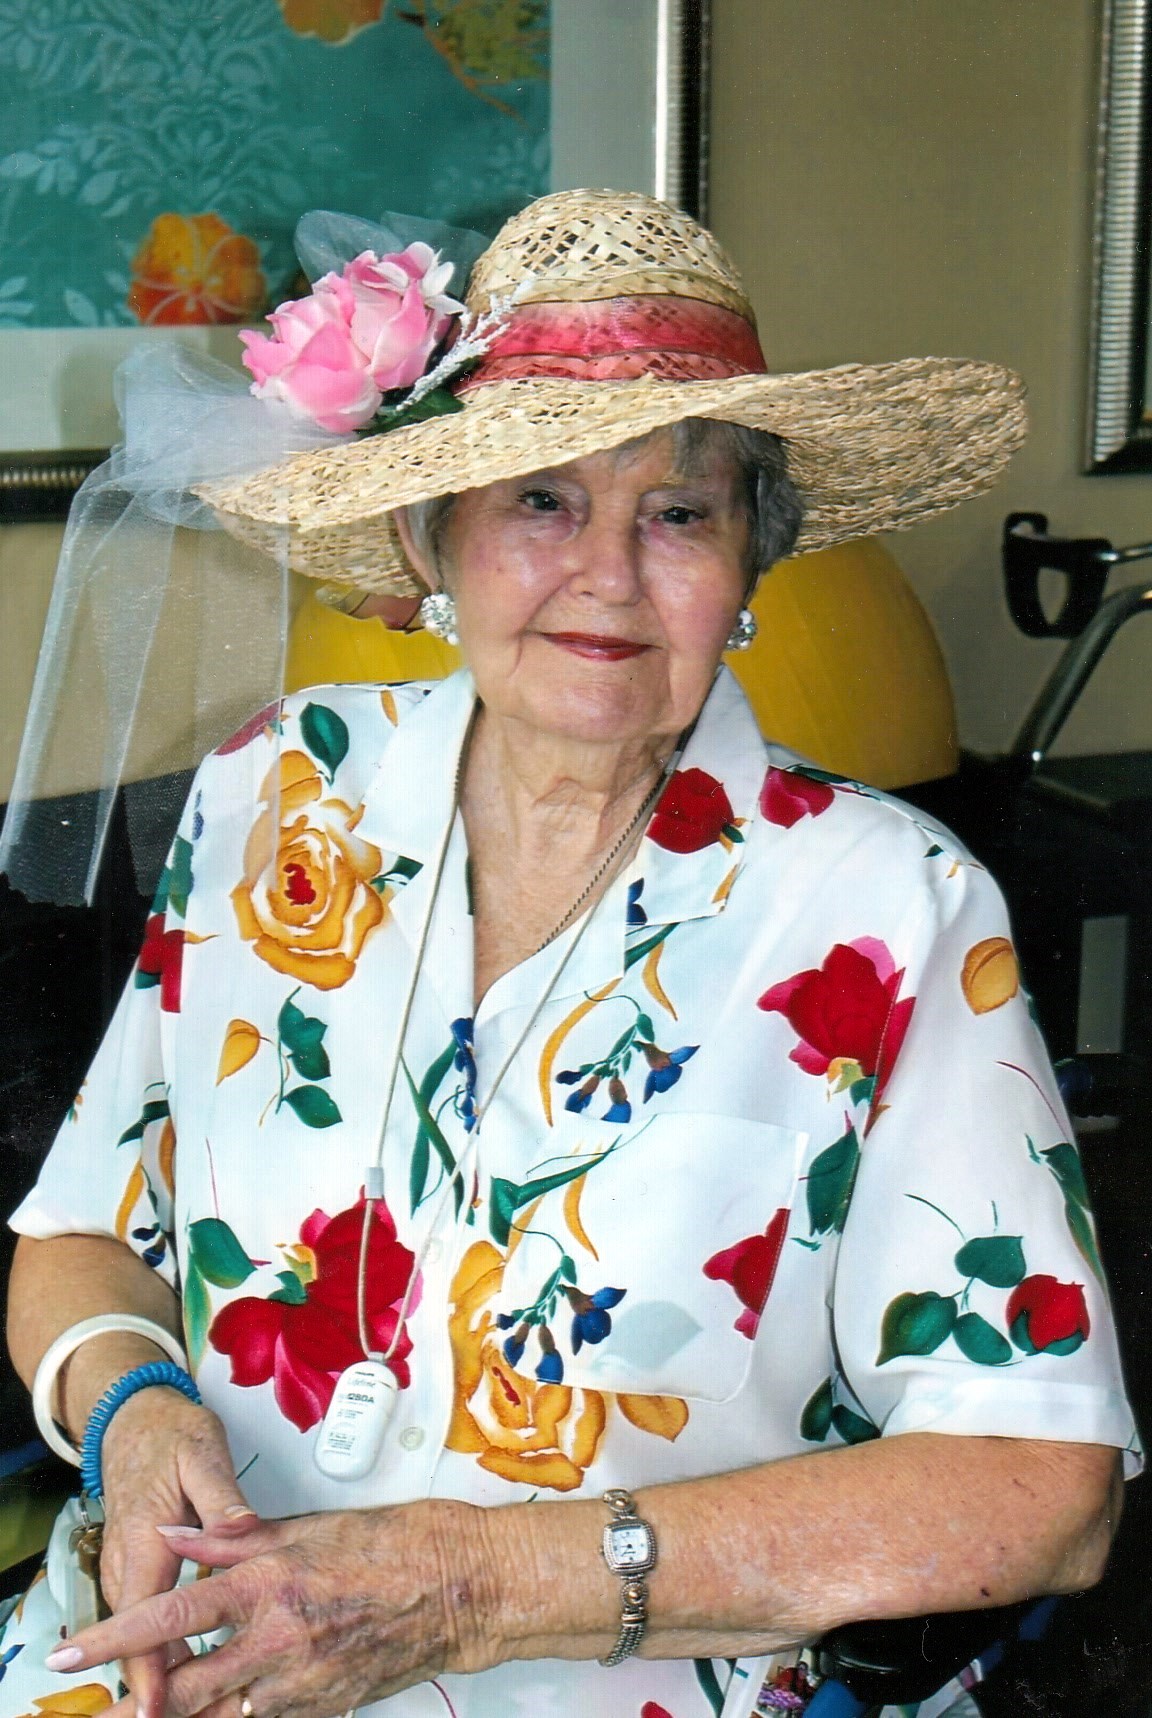 Obituary of Norma Jean Stroud - 19 diciembre, 2018 - DE LA FAMILIA